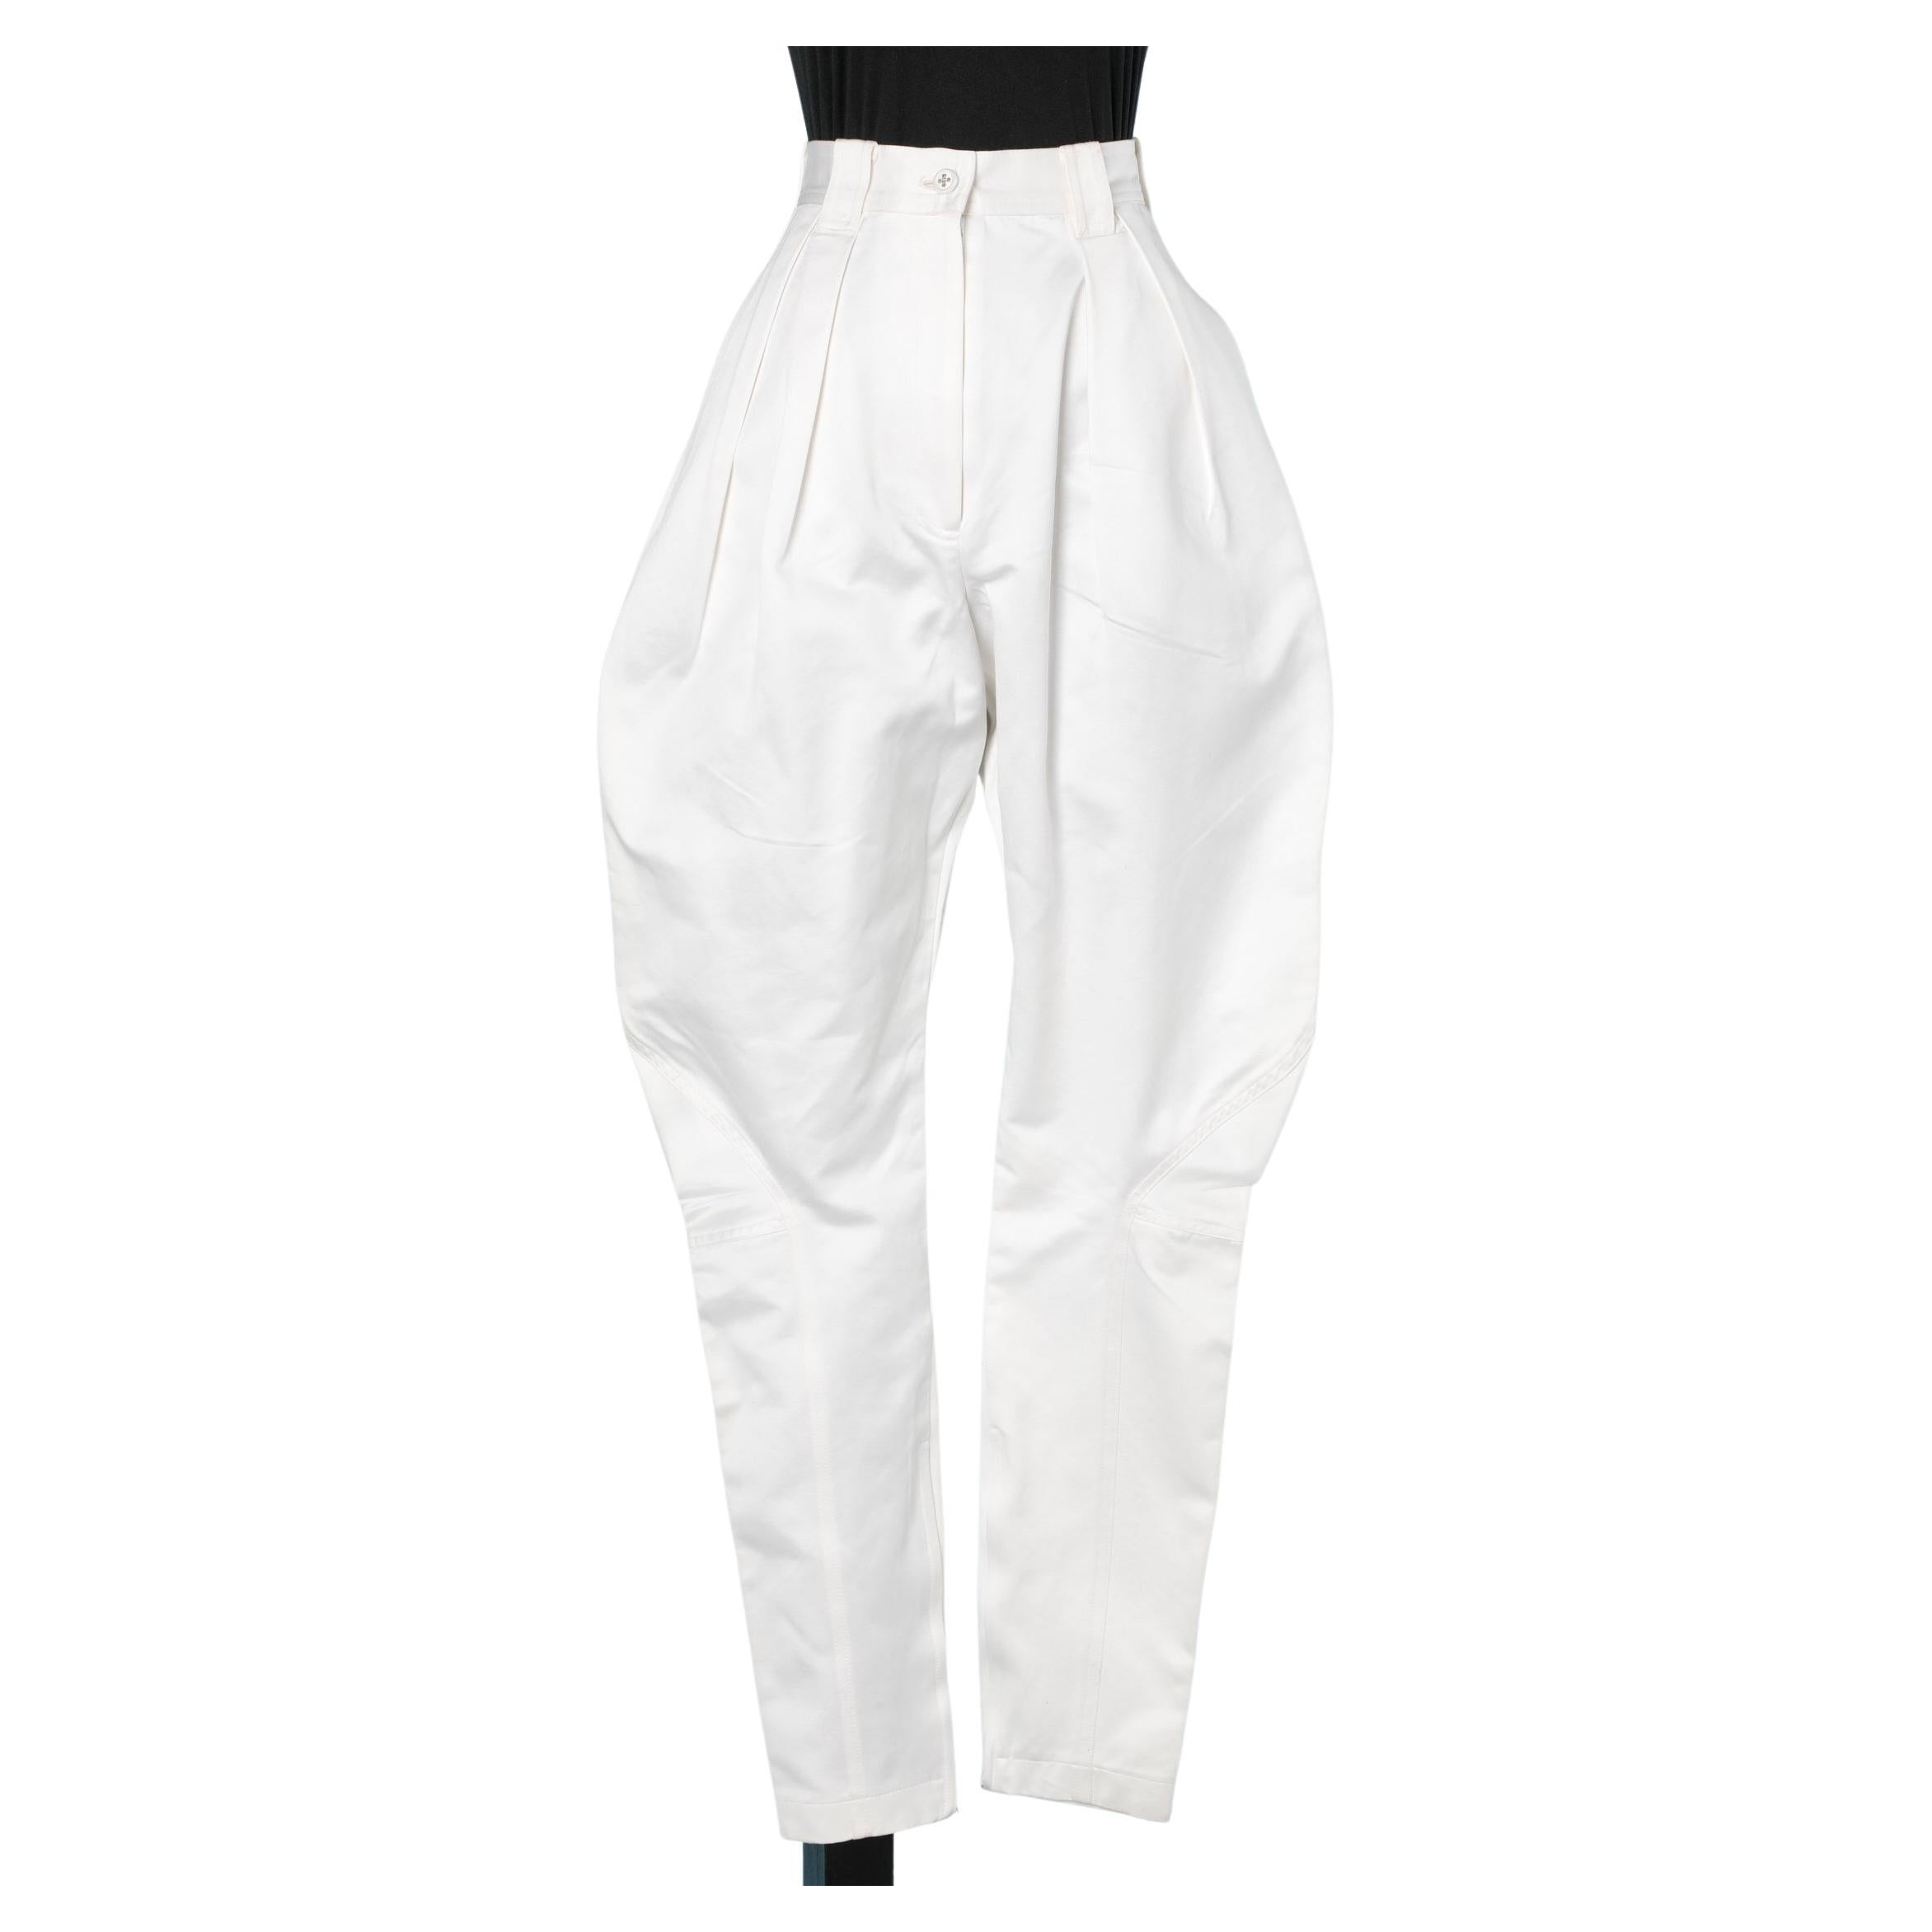 White cotton jodhpur pants laced in the back Chantal Thomass 